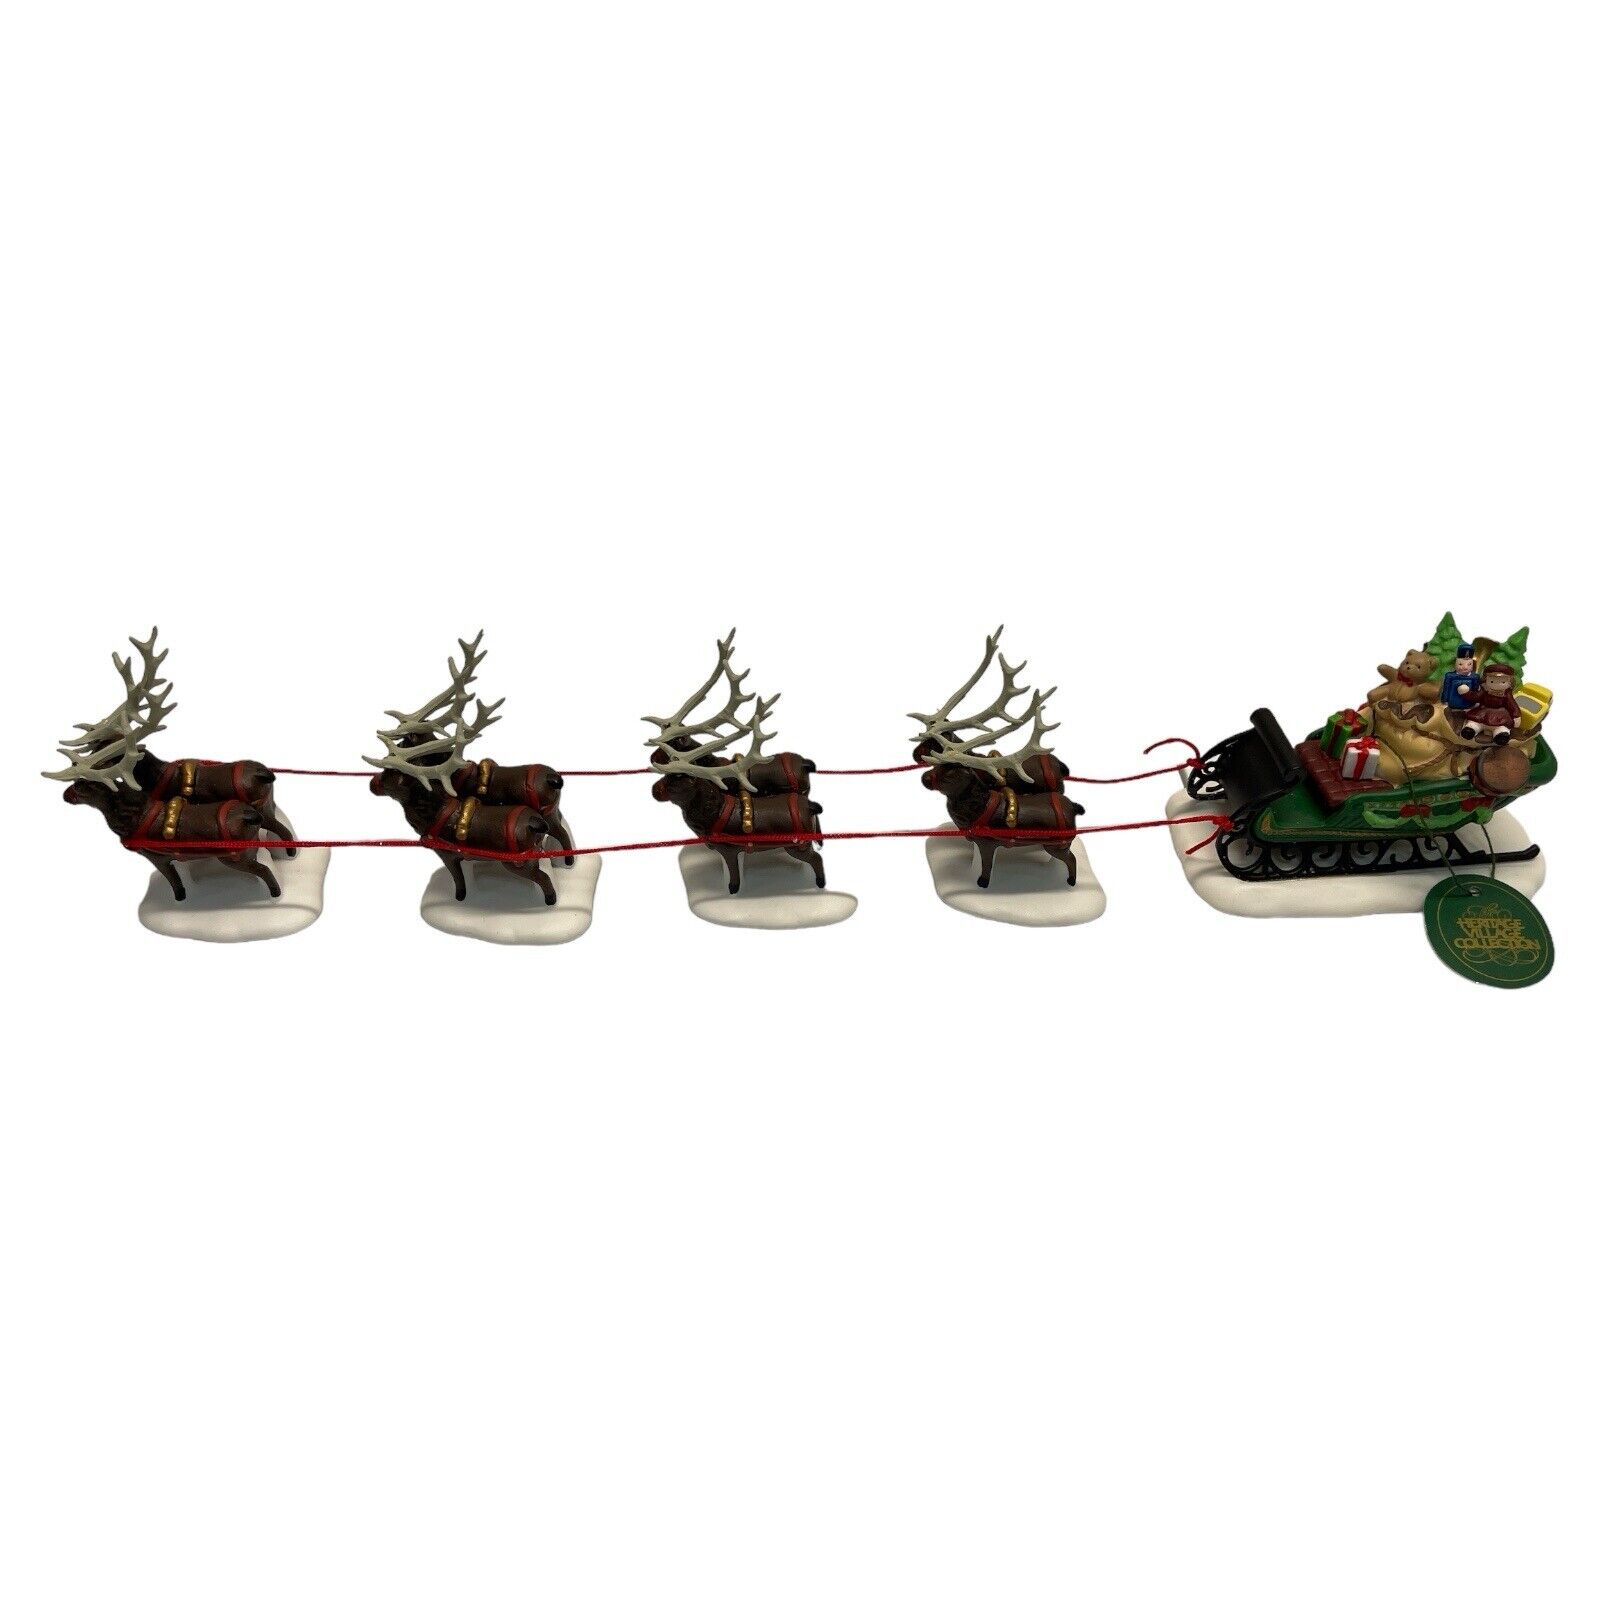 Heritage Village Collection Sleigh & Eight Tiny Reindeer #5611-1 Dept 56